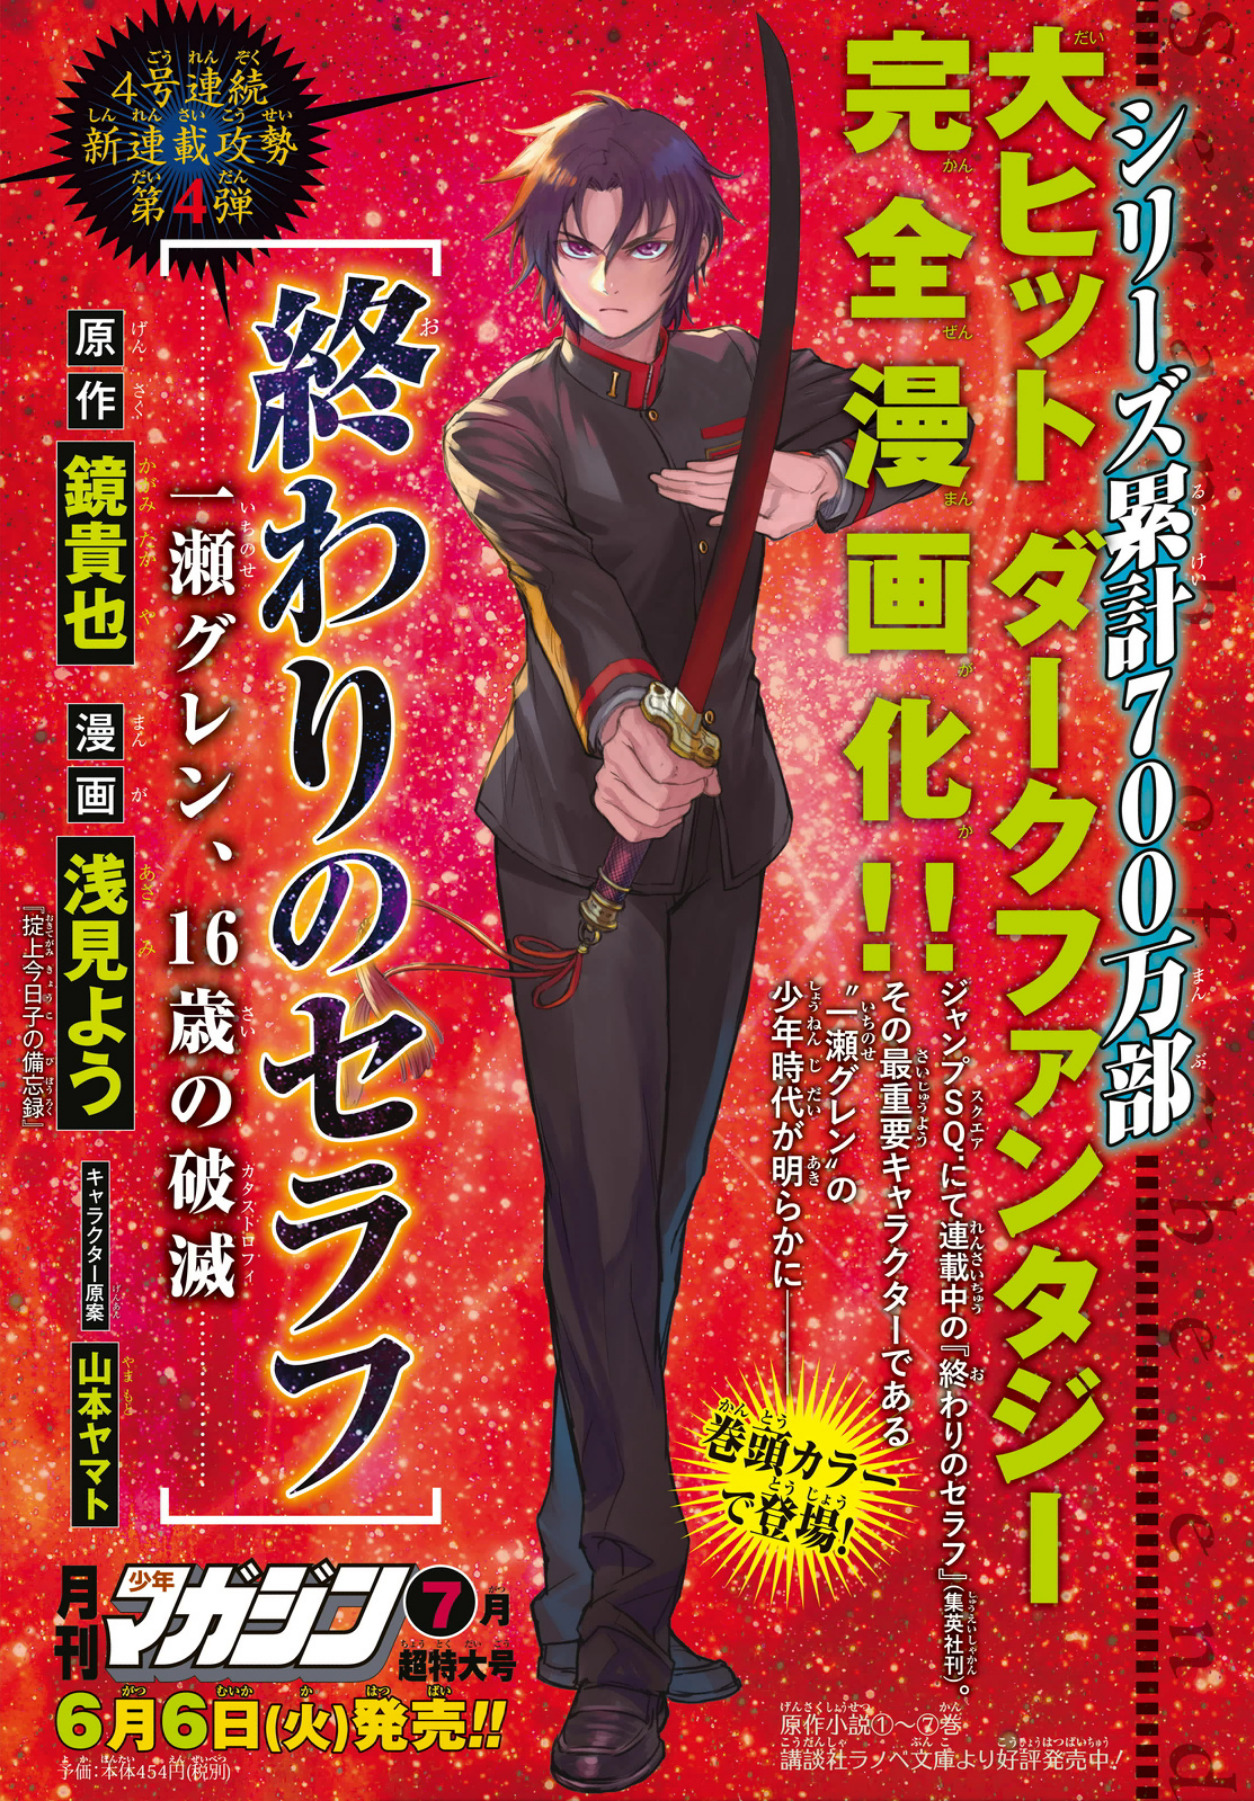 Seraph of the End: Guren Ichinose - Catastrophe at Sixteen Manga